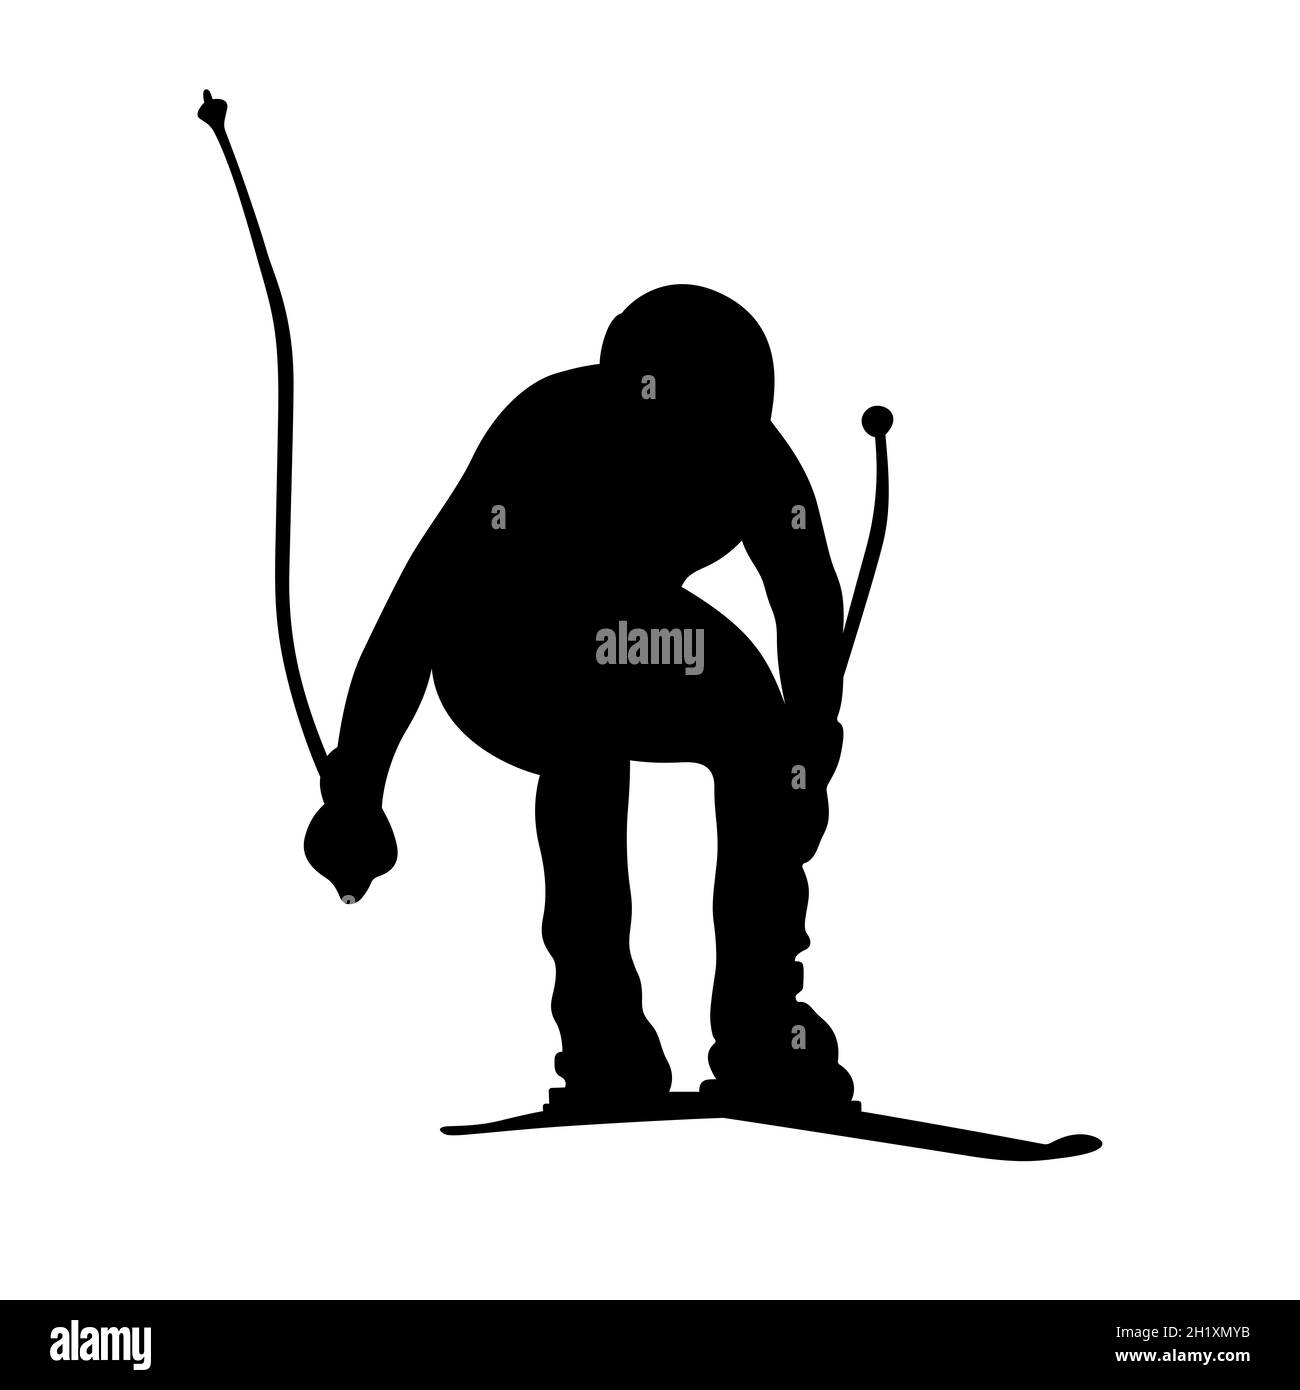 male skier alpine skiing downhill black silhouette Stock Photo